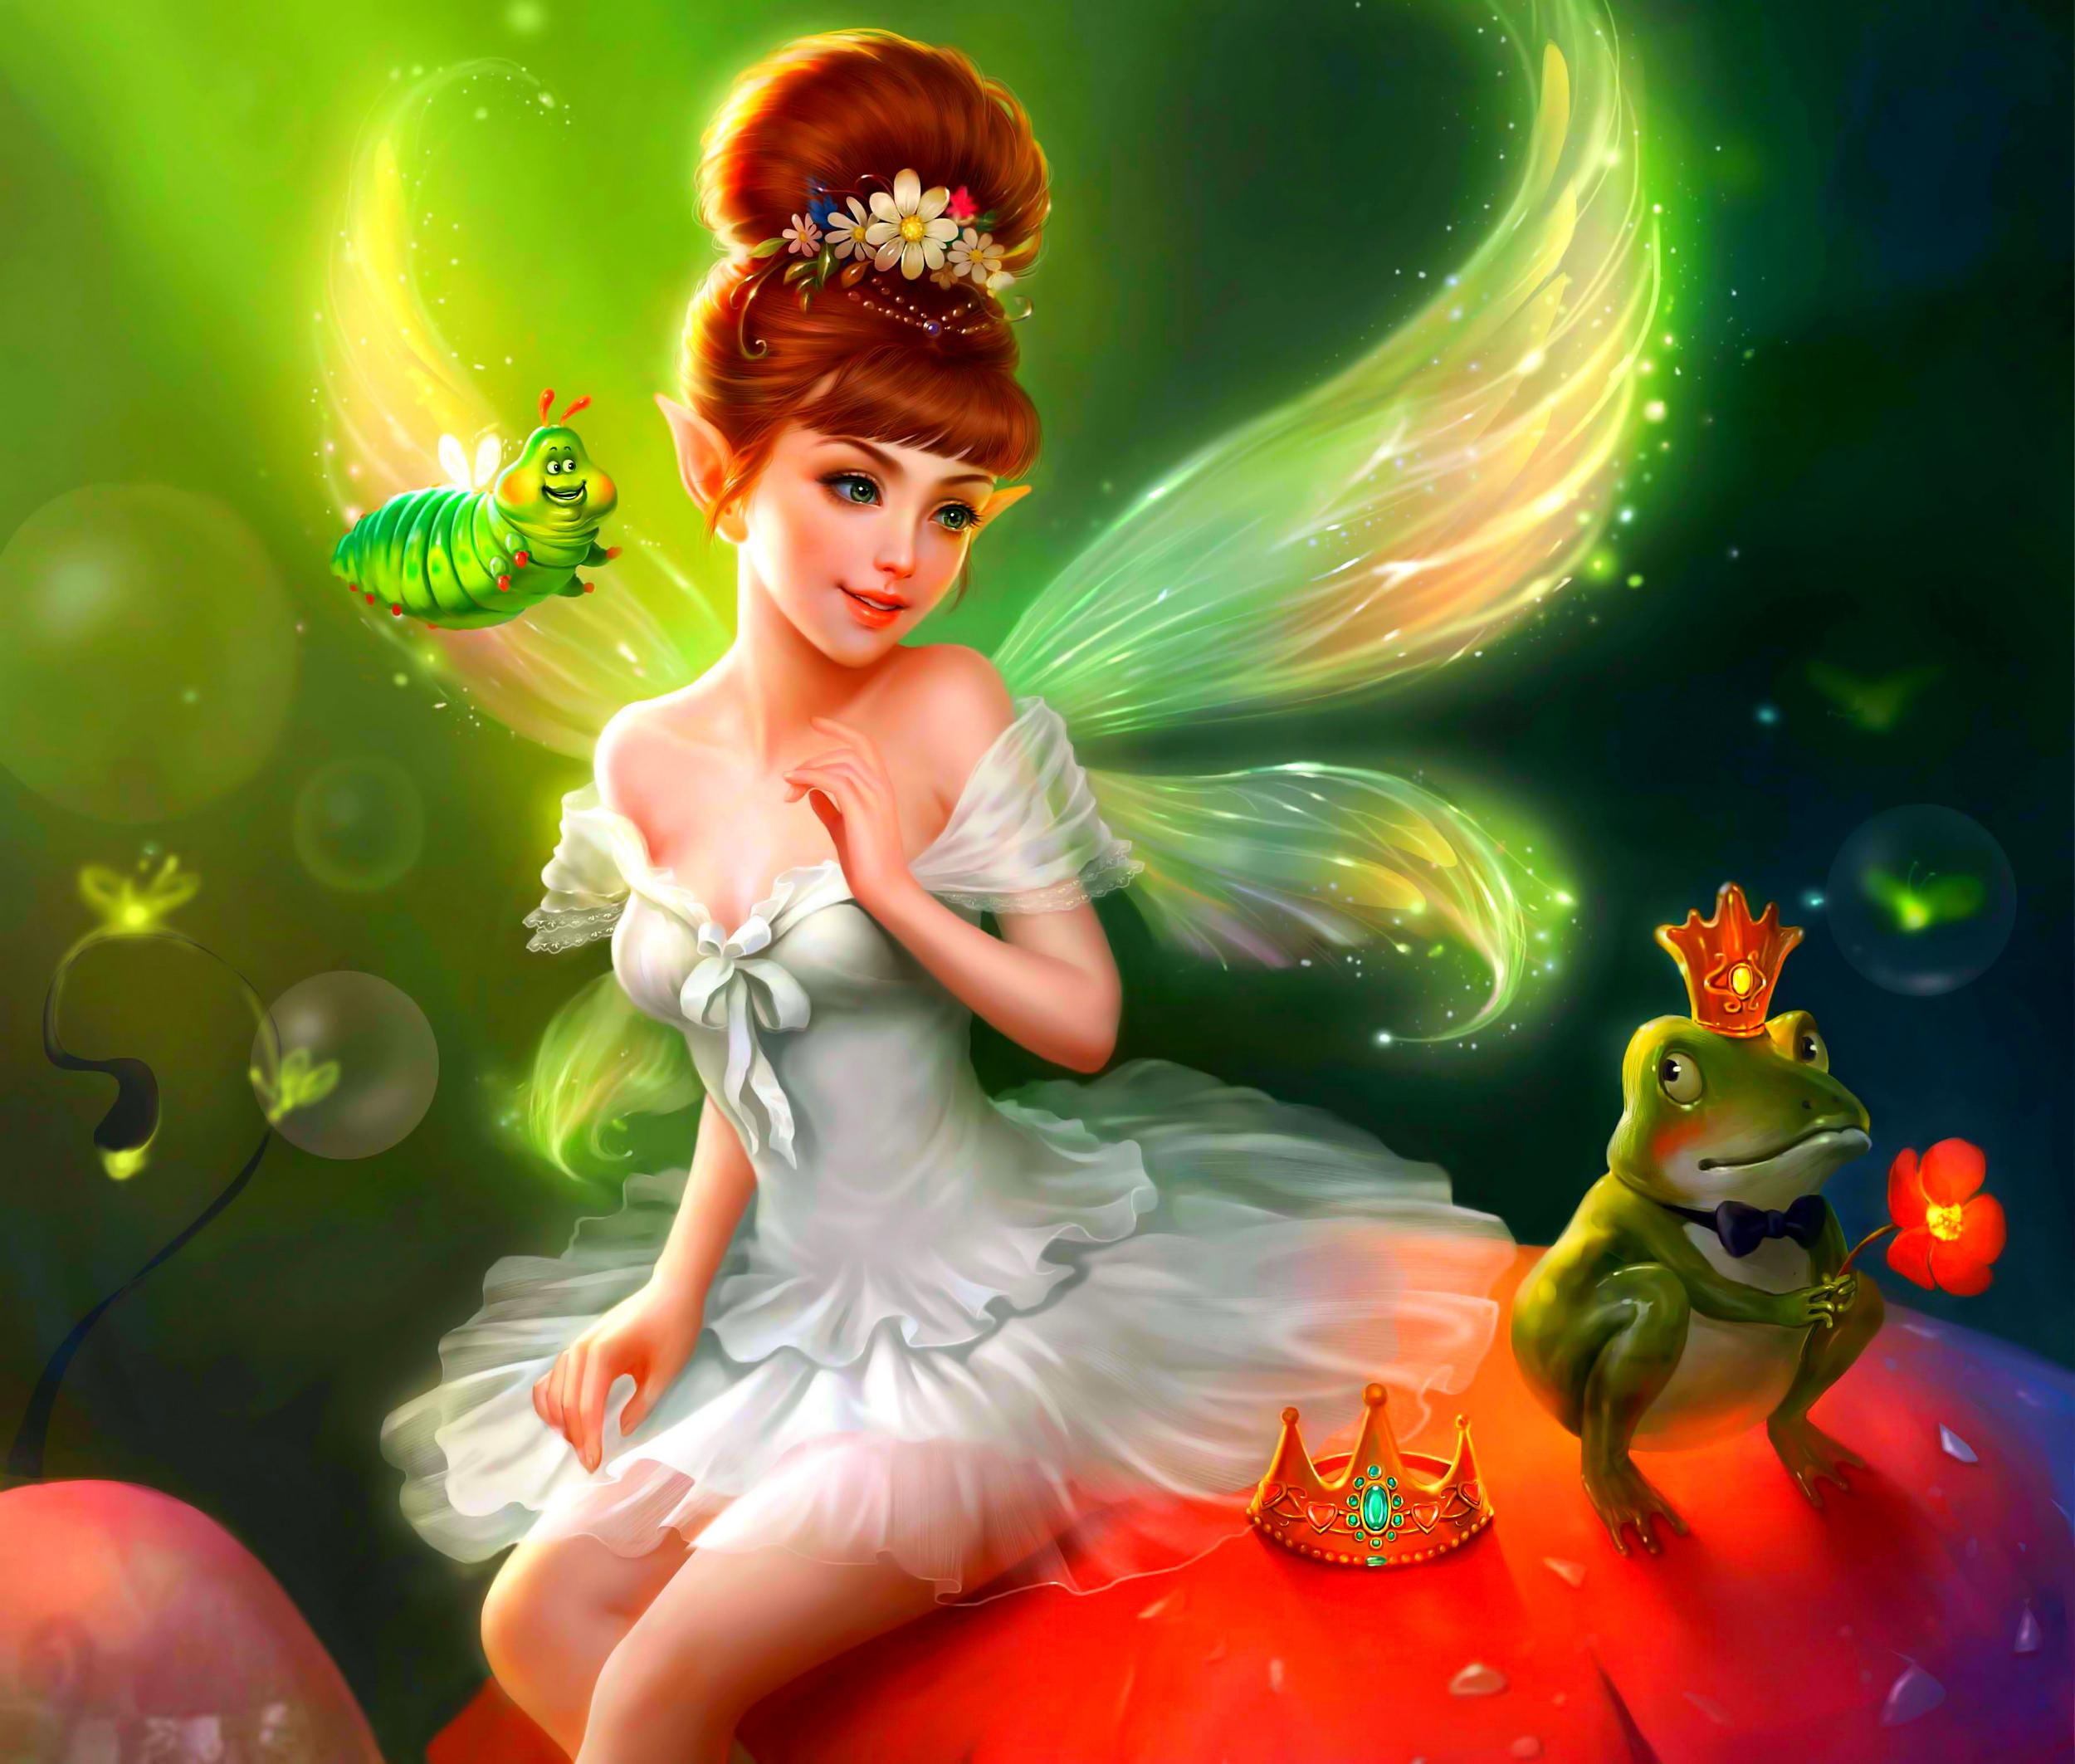 Sweet Lil Fairy, beautiful, prince, magic, wings, crown, beauty